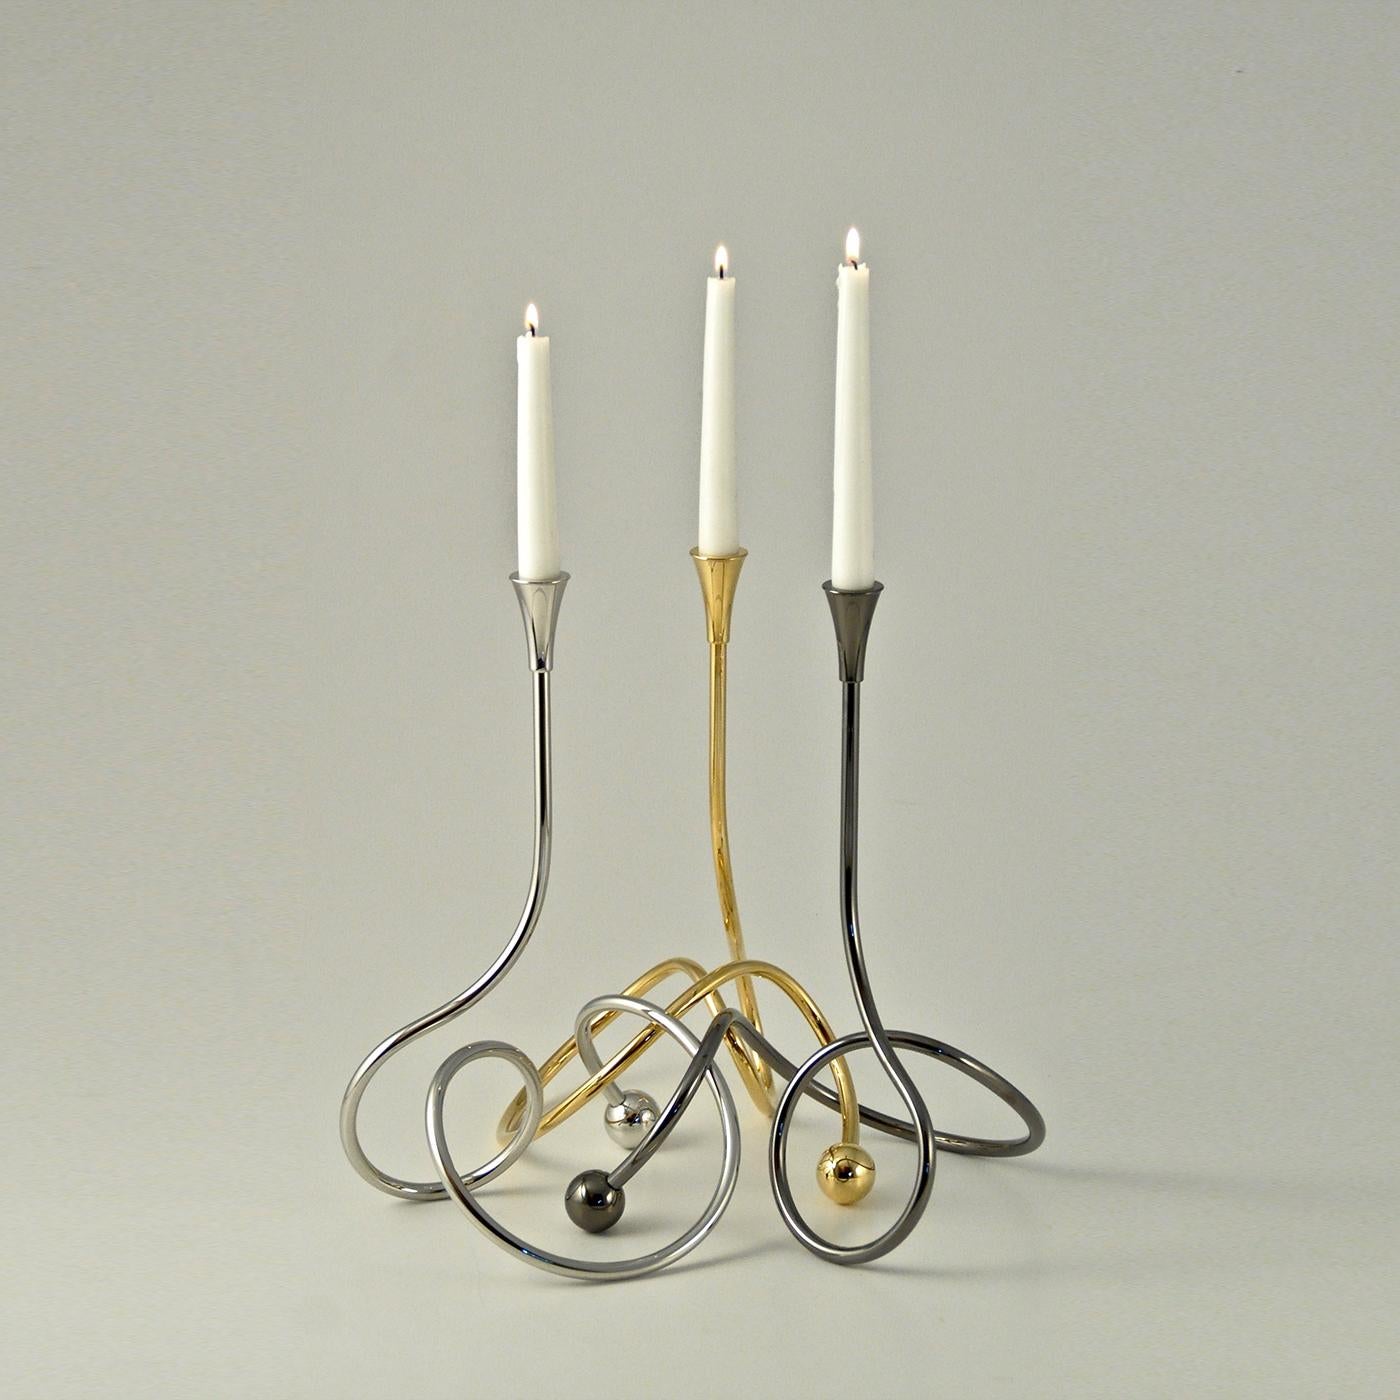 Italian Malibù Set of 3 Candleholders